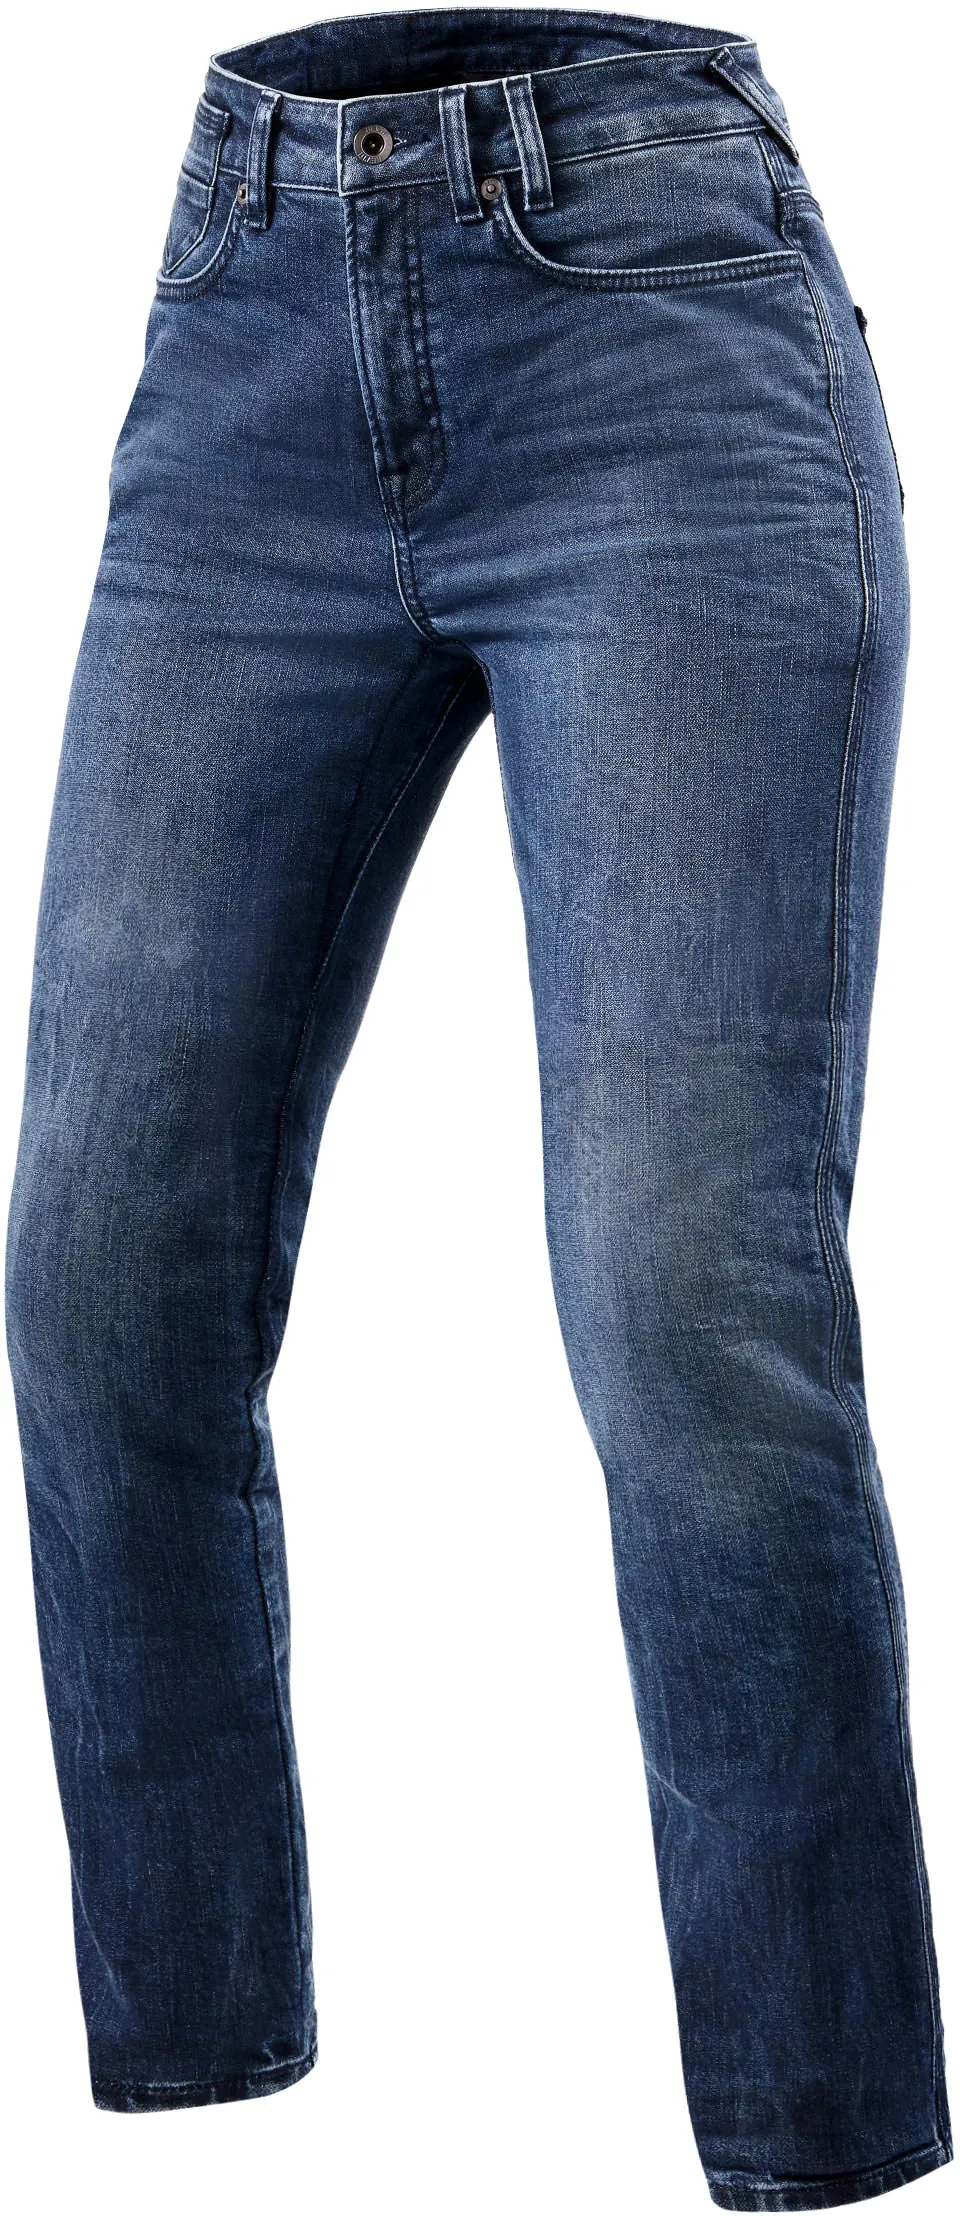 Revit Victoria 2, jeans femmes - Bleu - W28/L32